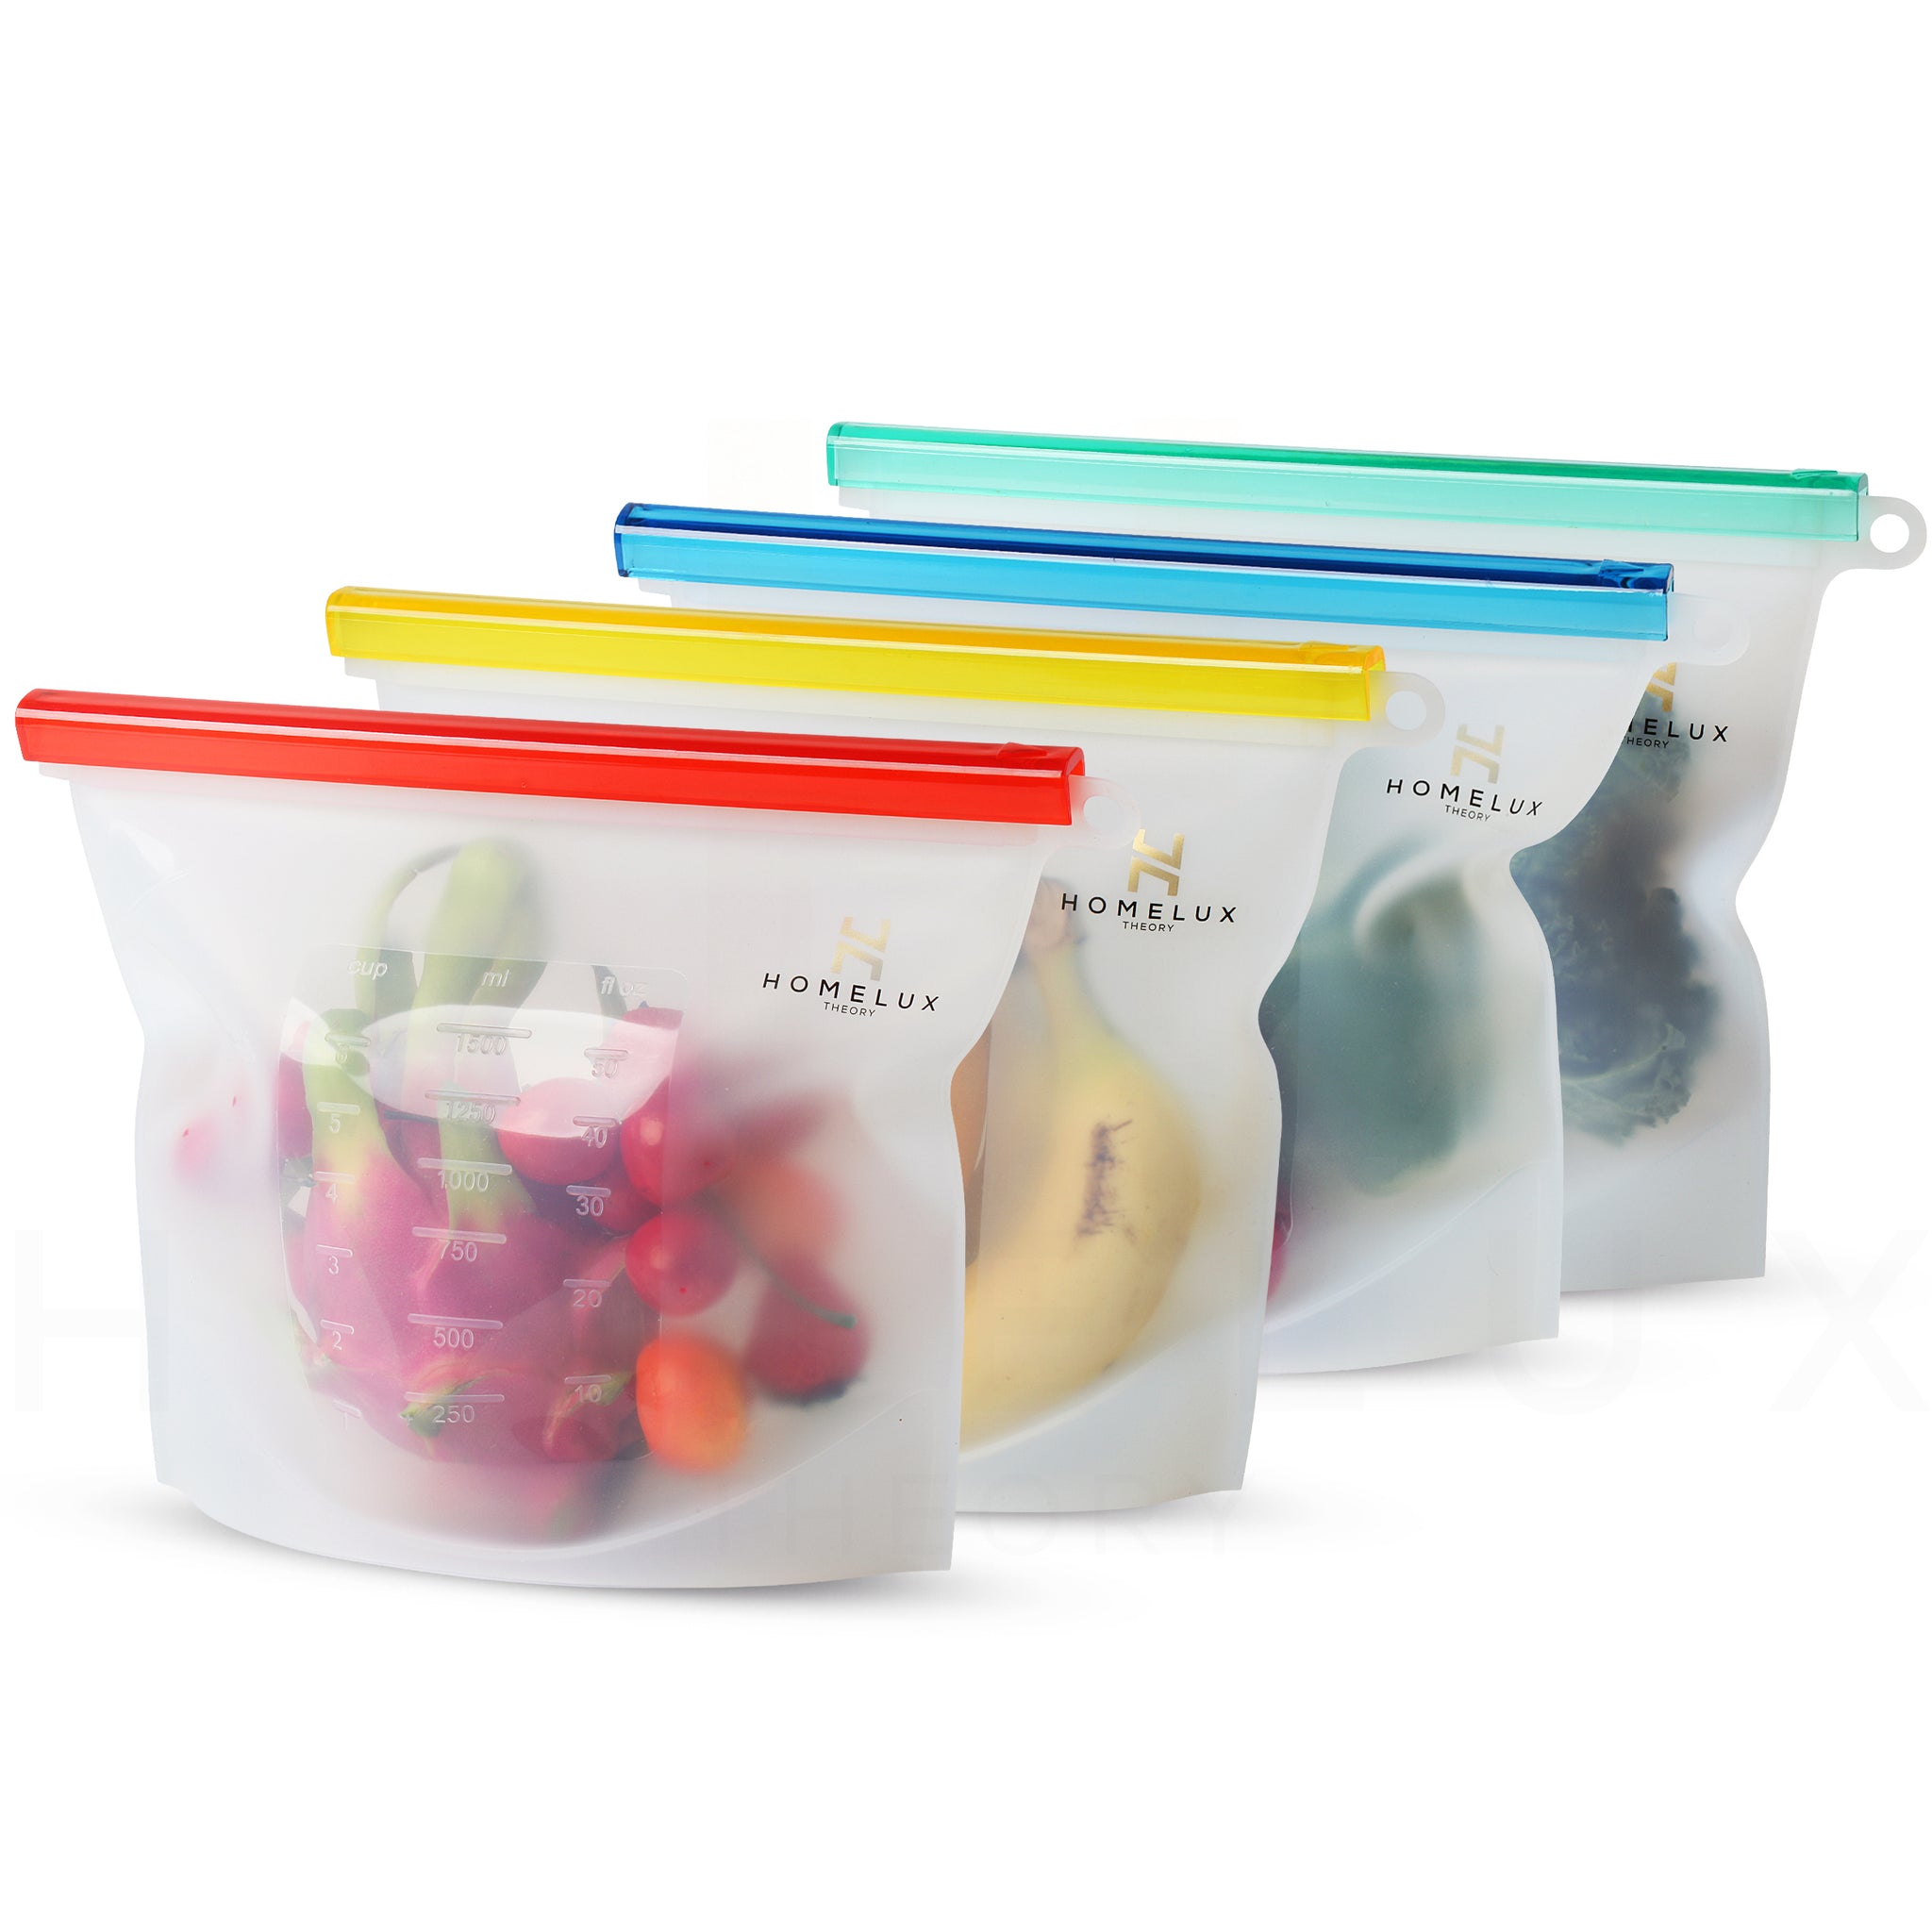 Wrap Plastic Packaging Bags Food Storage Bag Reusable Freezer Sandwich Sealing  Bag Kitchen Refrigerator Food Preservation